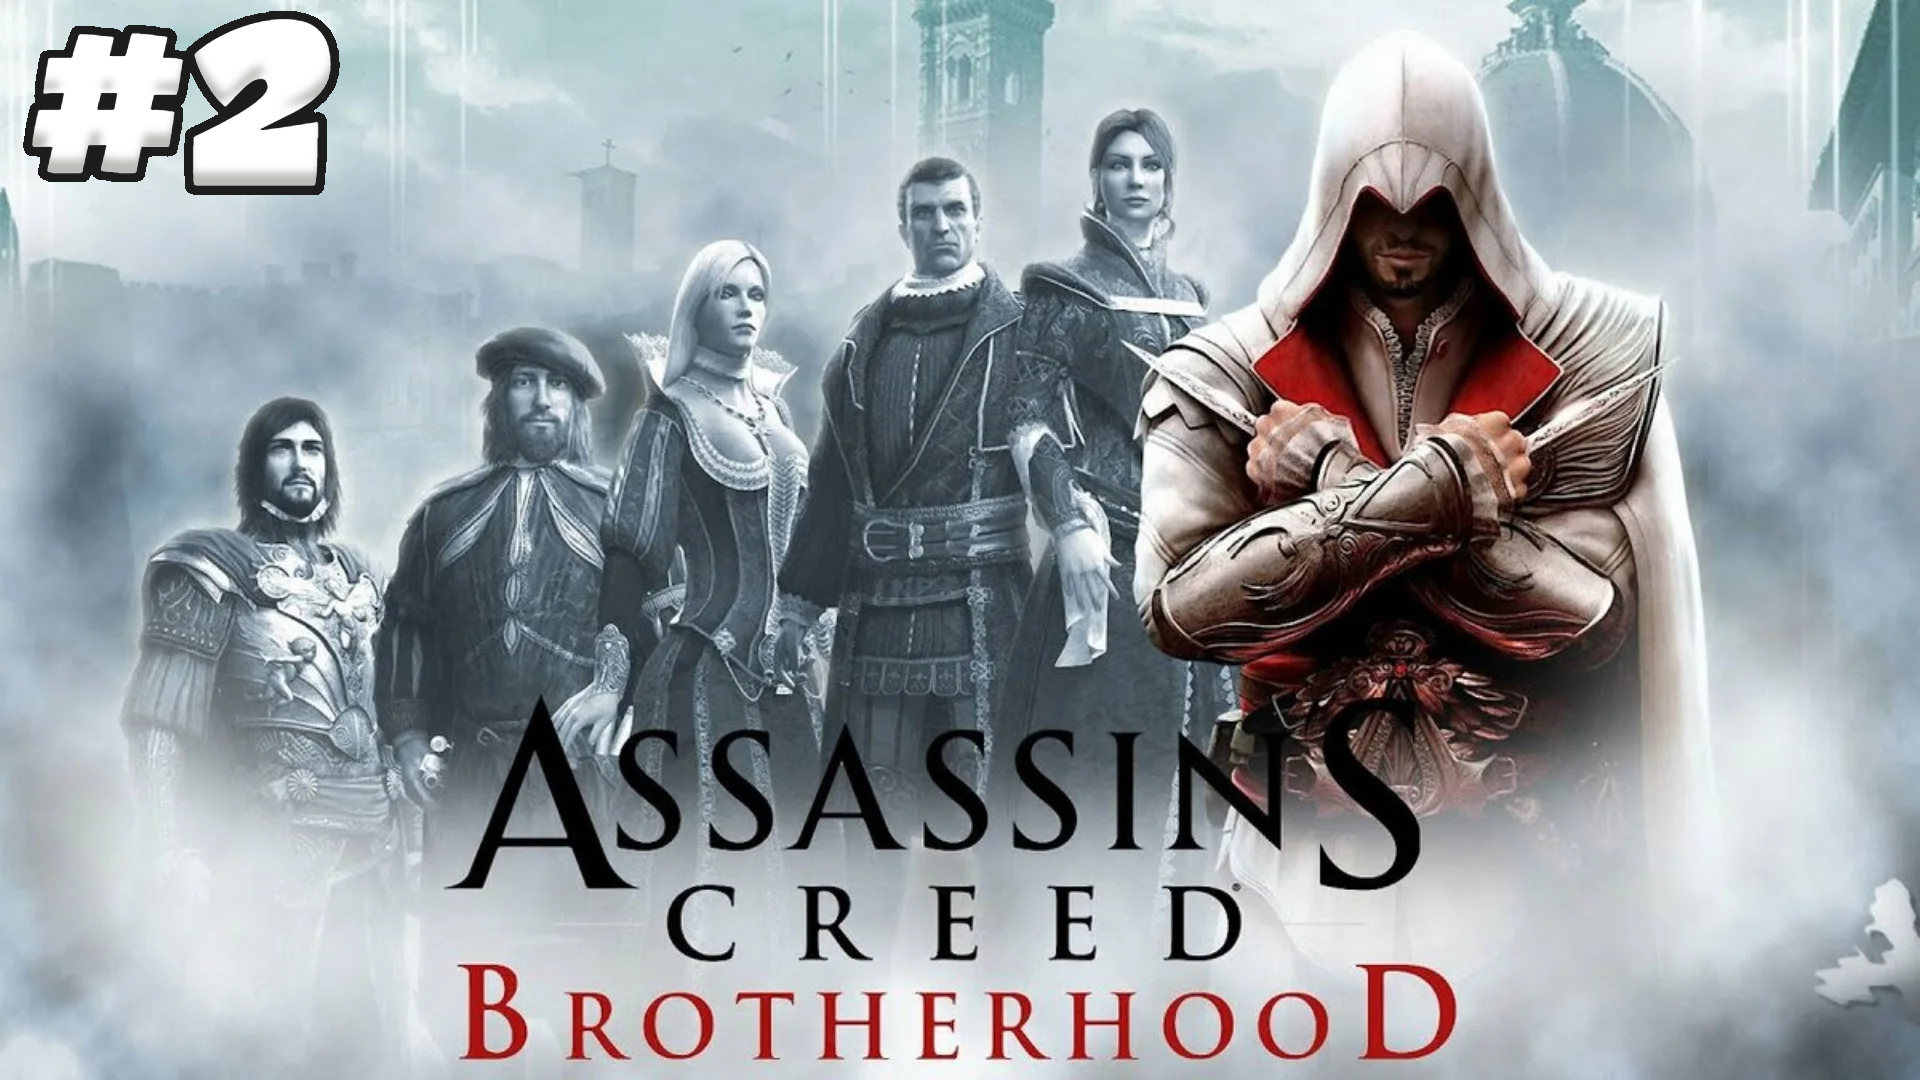 Игра ассасин крид братство. Assassin's Creed. Братство. Ассасин Крид 2 братство крови обложка. Братство крови ассасин 3. Assassin's Creed 2 Brotherhood poster.